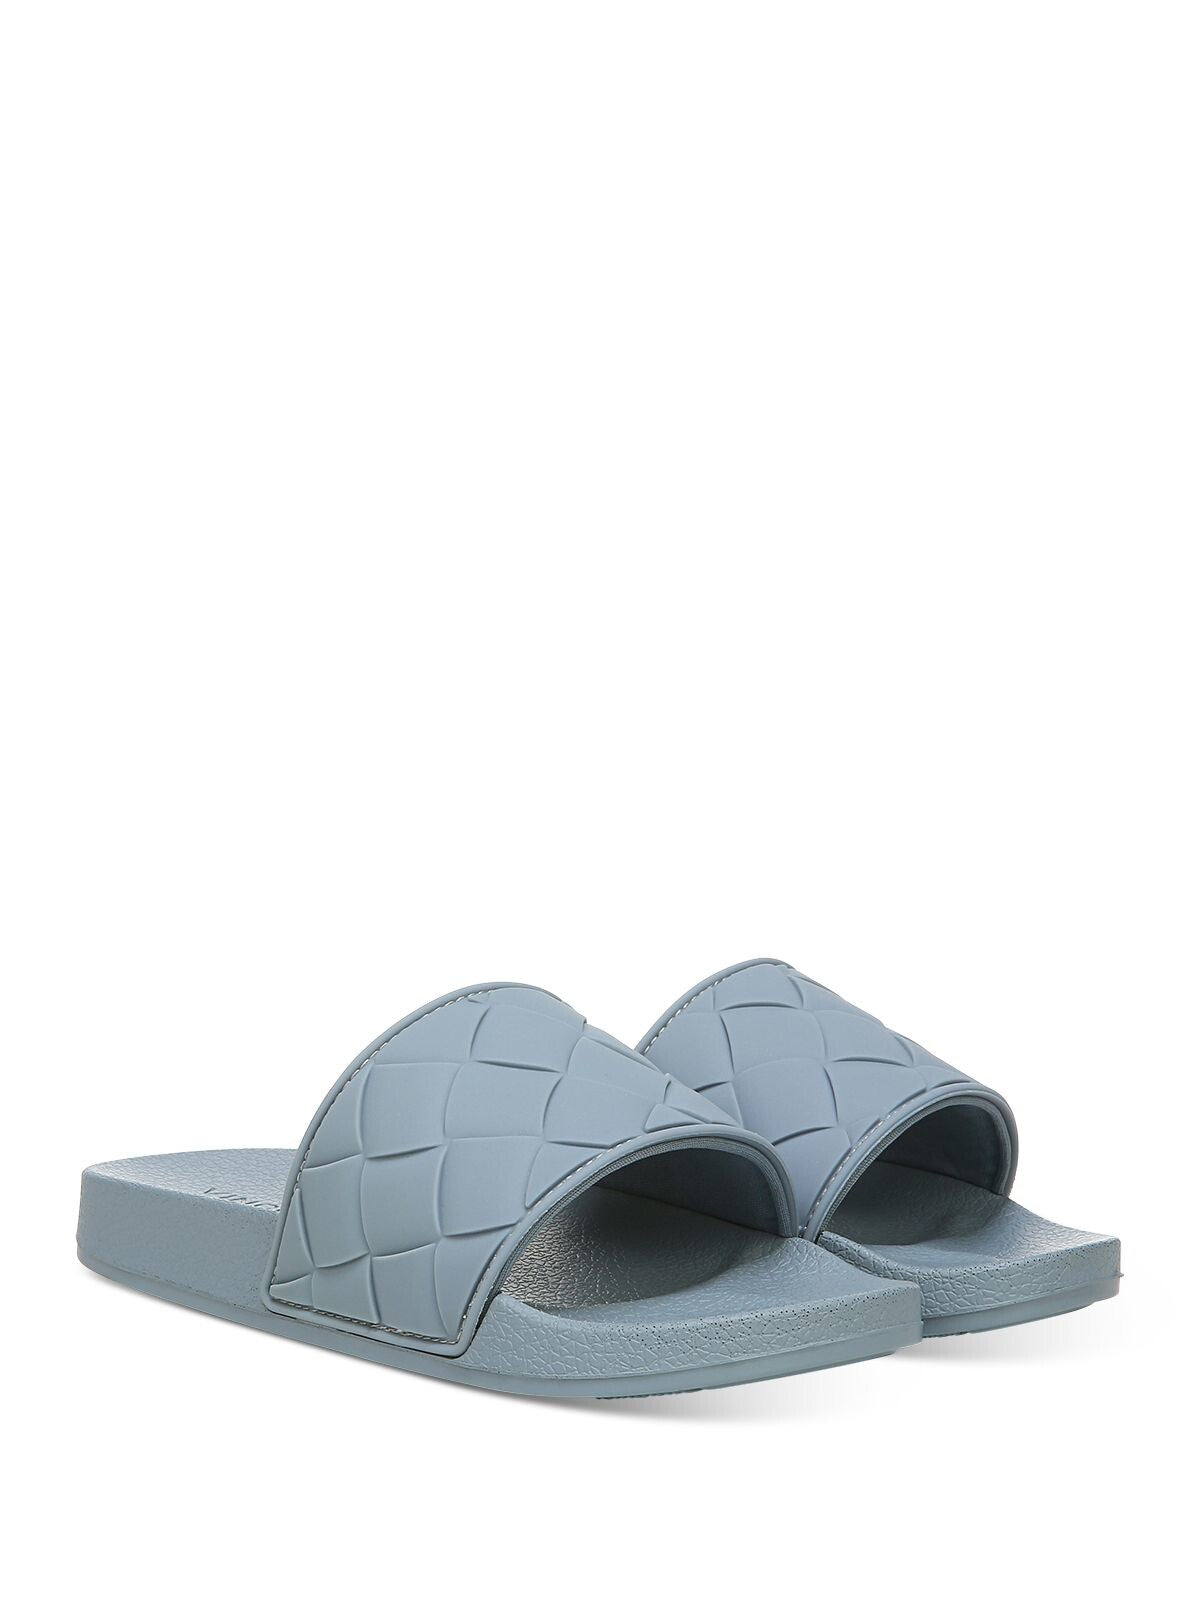 VINCE. Womens Light Blue Comfort Woven Watley Round Toe Platform Slip On Slide Sandals Shoes 6 M